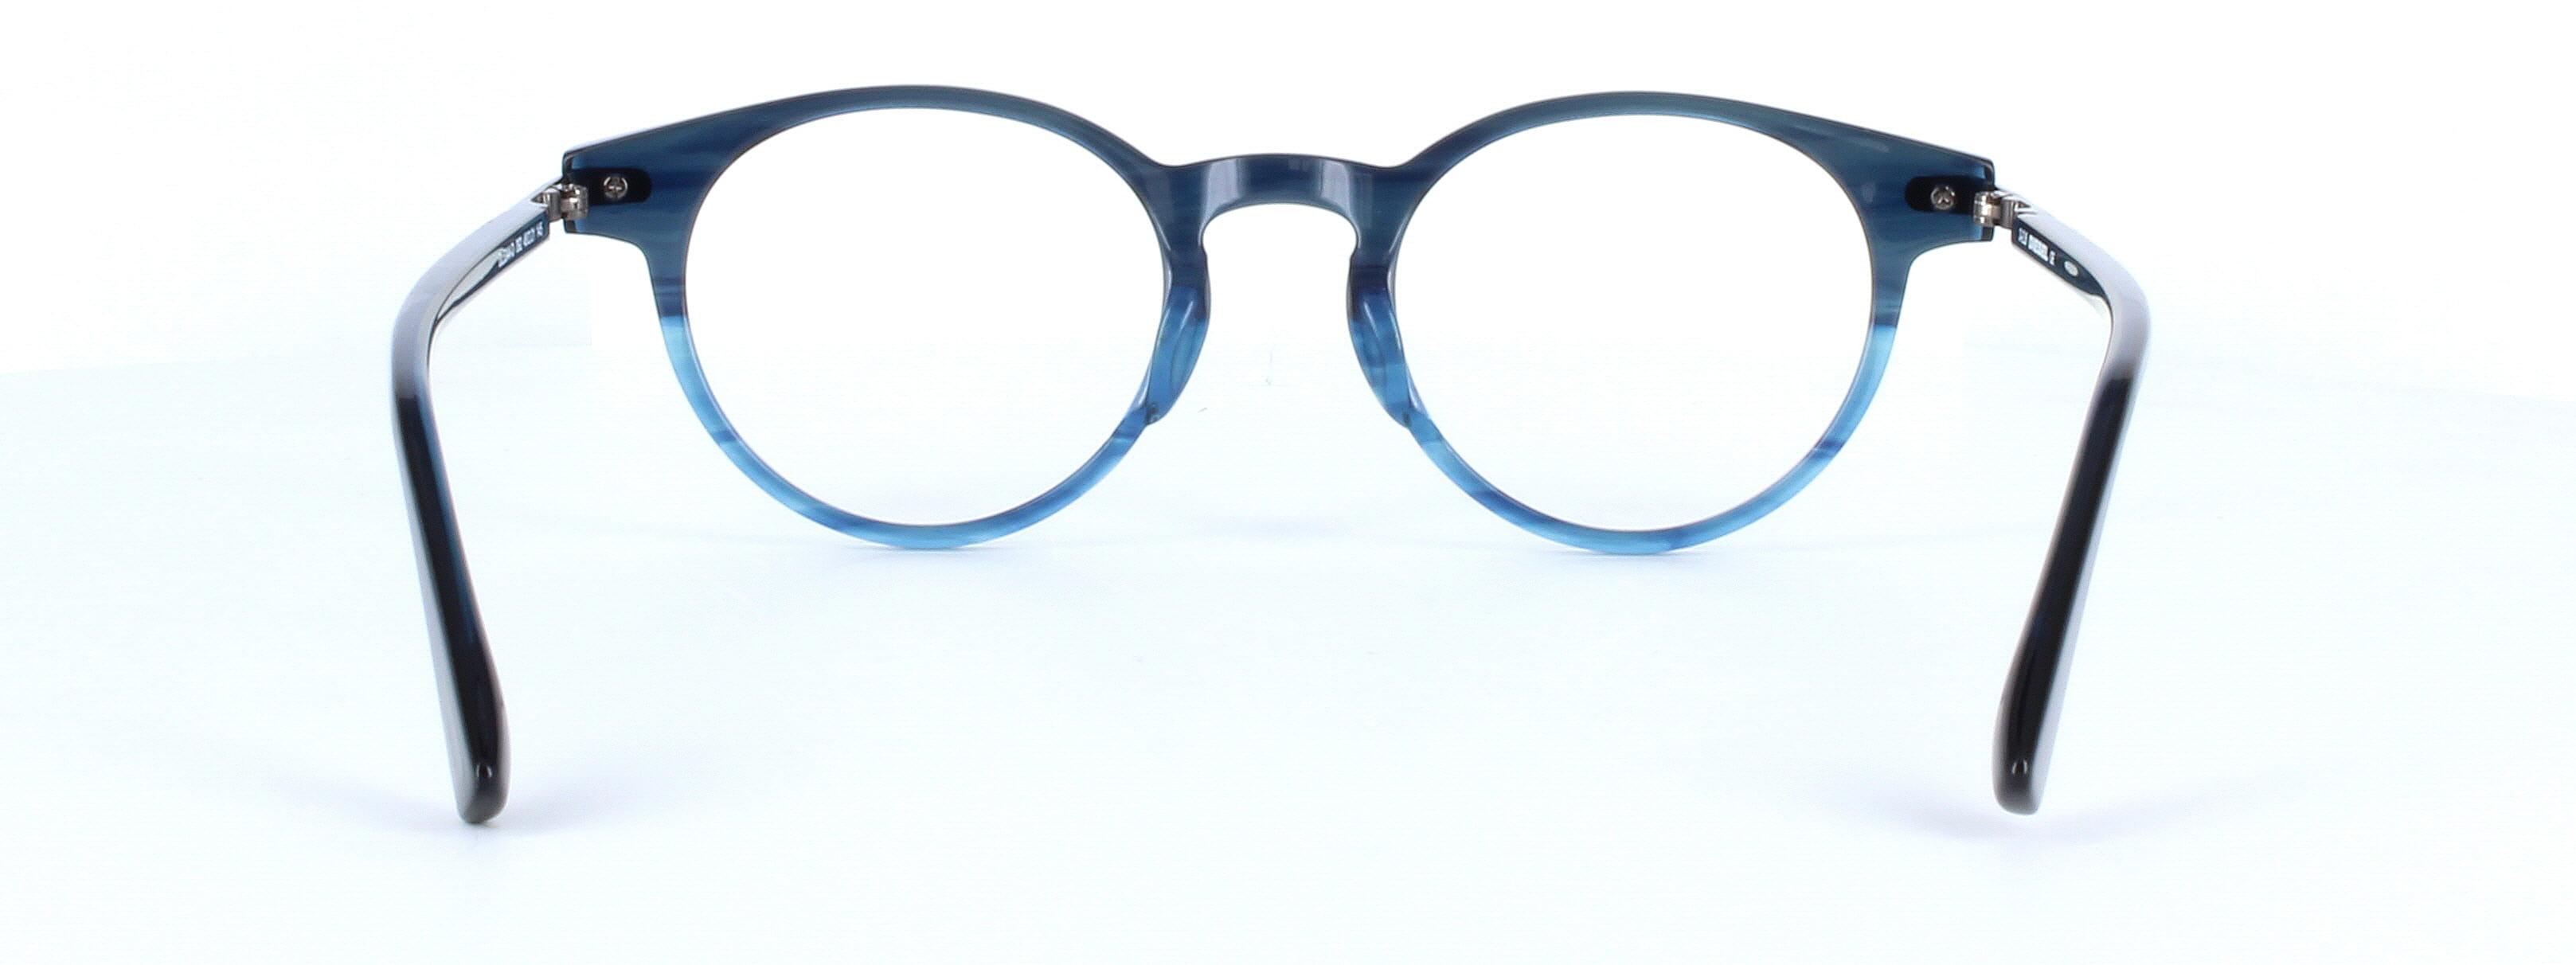 DIesel 5344 - Ladies round shaped designer glasses in blue stripe - image view 3